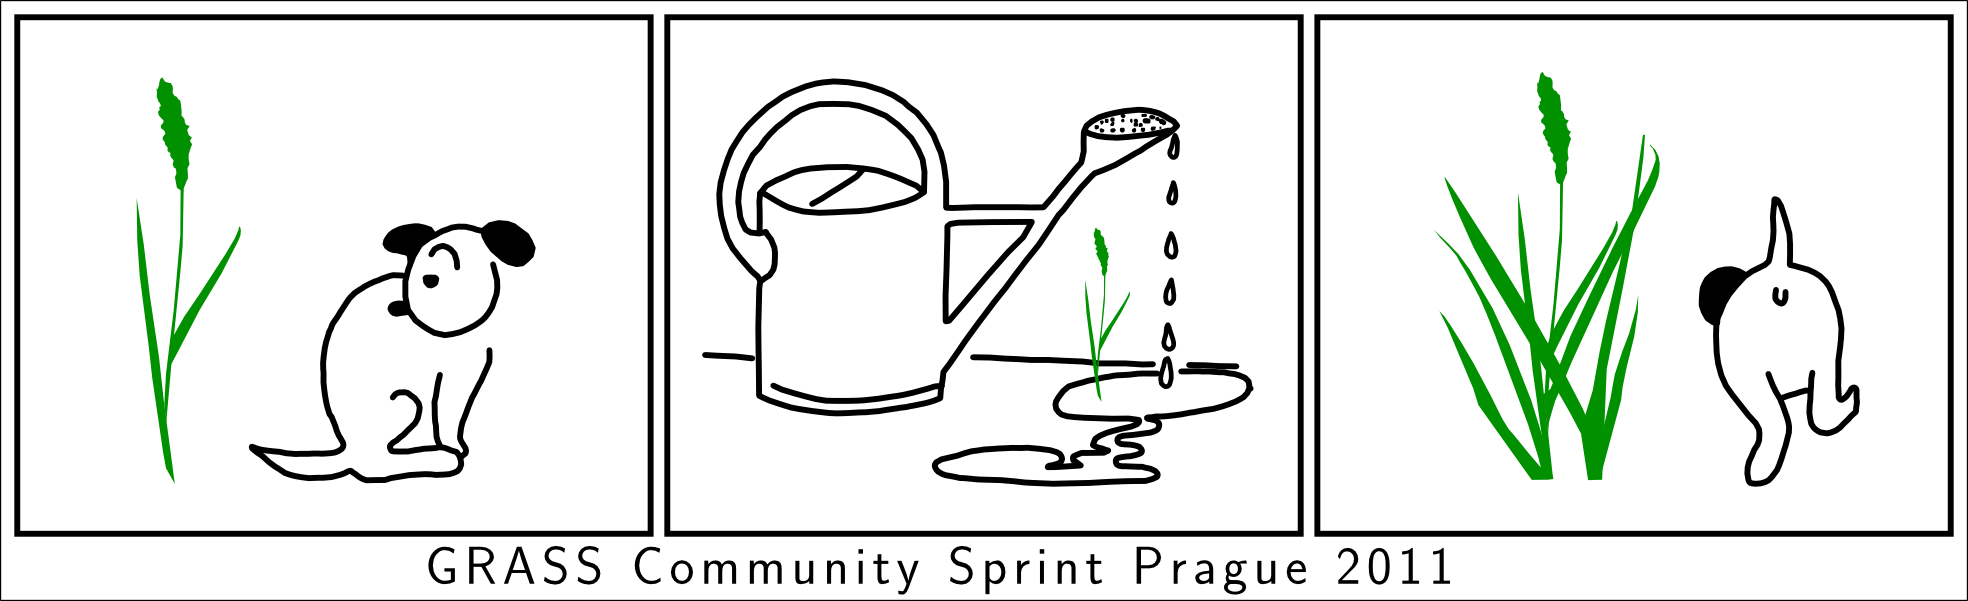 File:Community sprint prague 2011.png